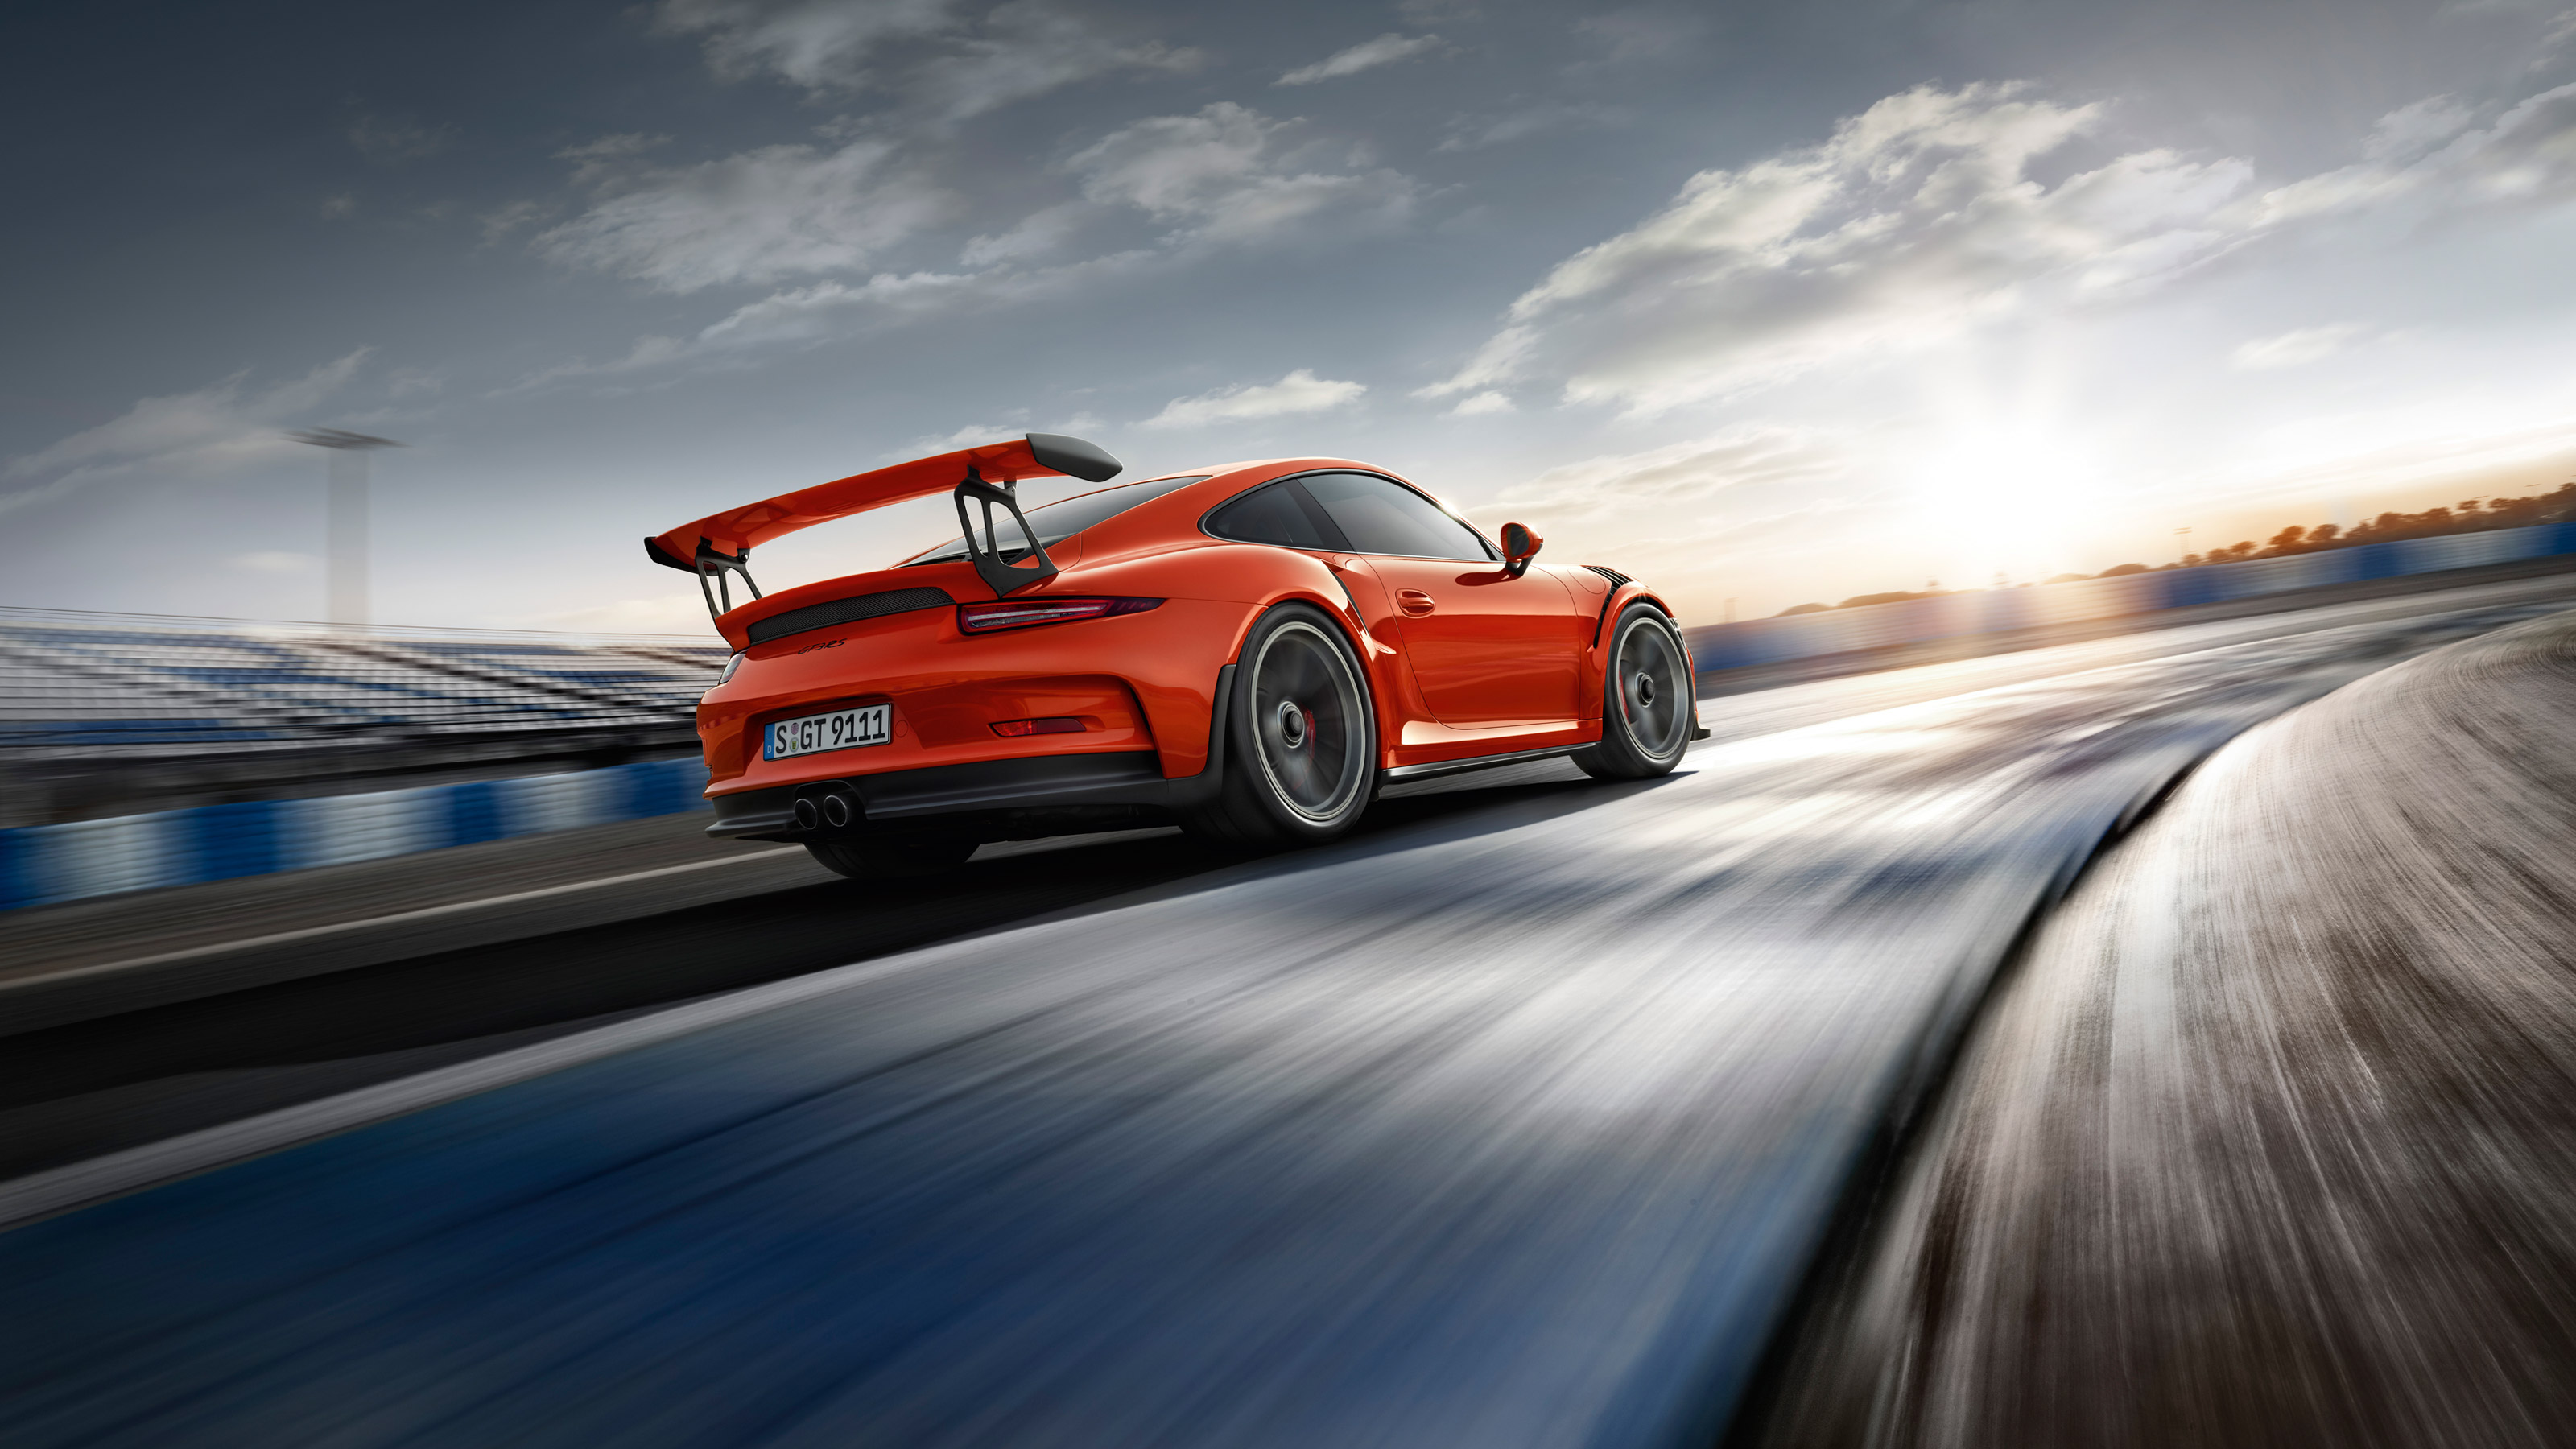 Porsche 911 GT3 Wallpapers, Pictures, Images